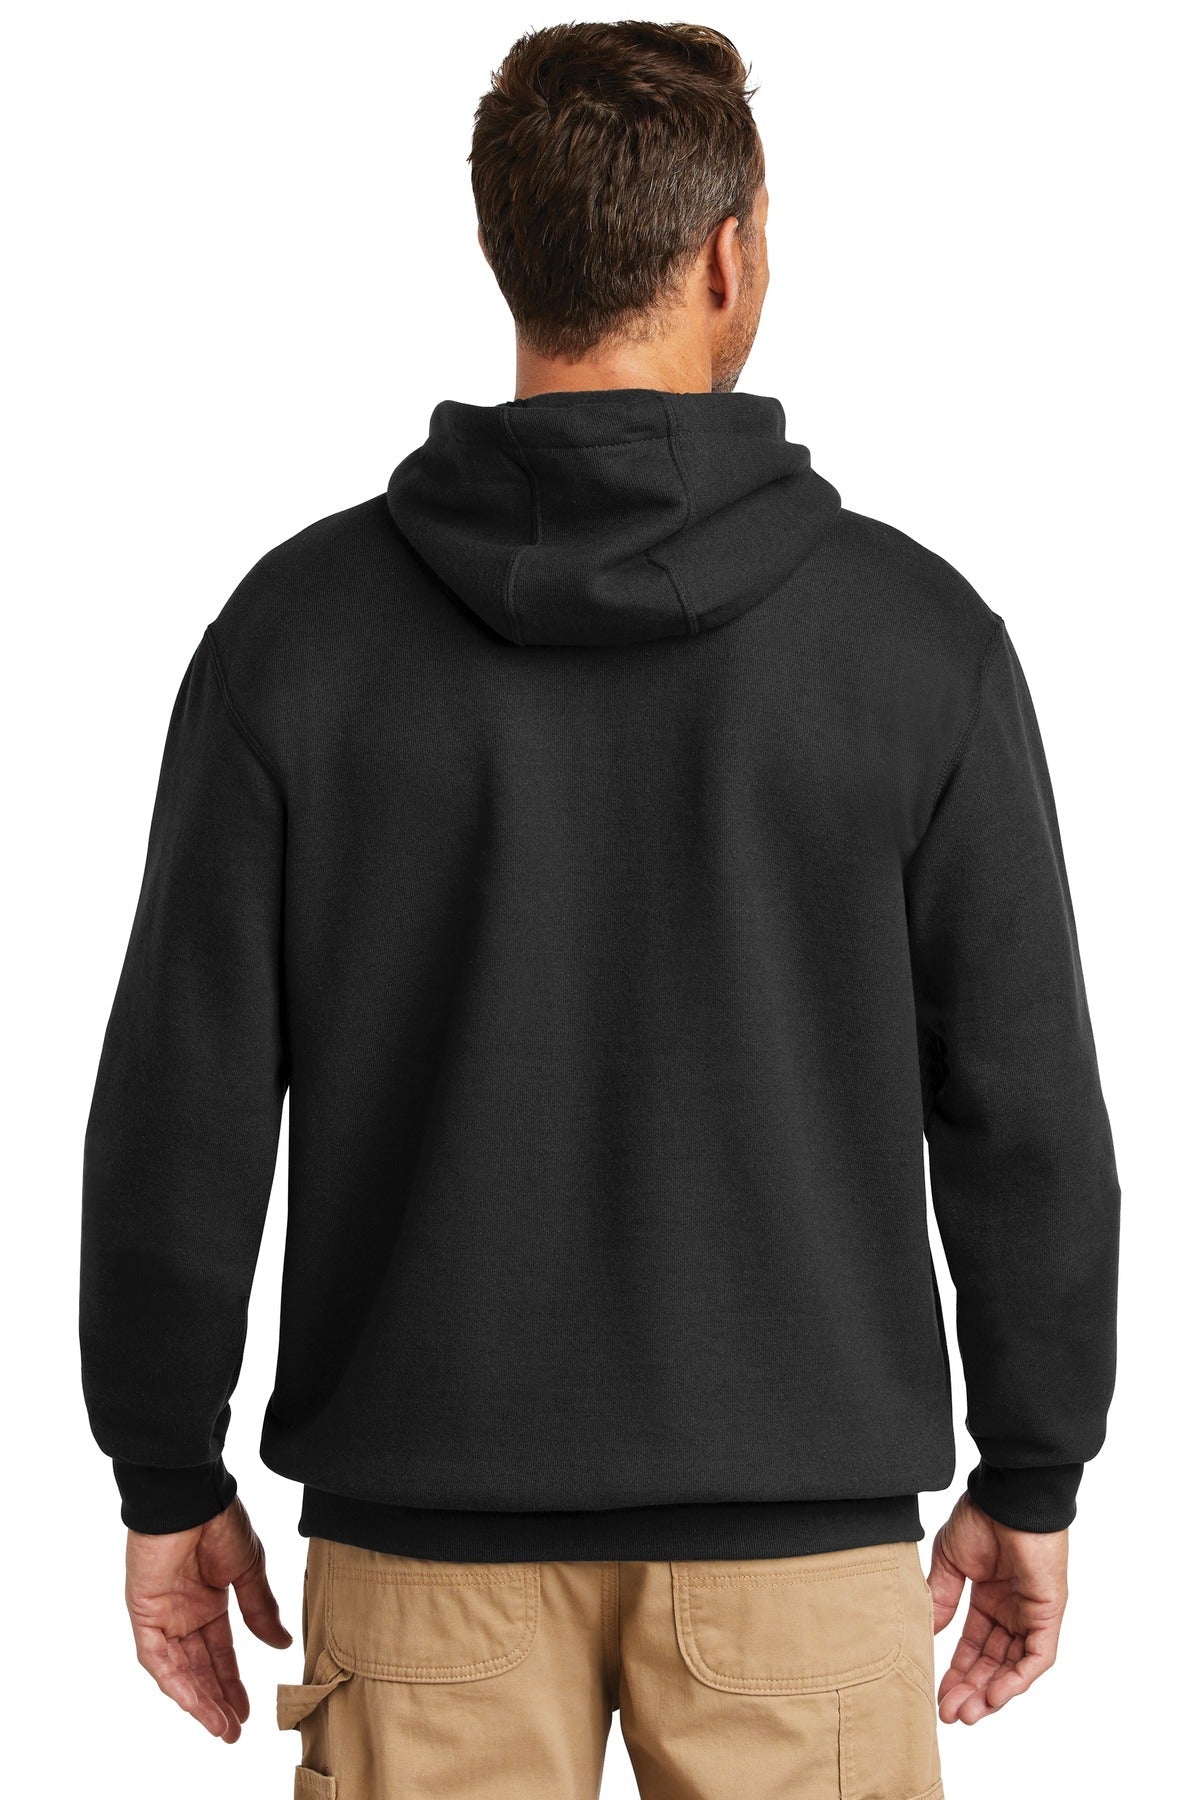 Carhartt ® Midweight Hooded Sweatshirt. CTK121 - DFW Impression